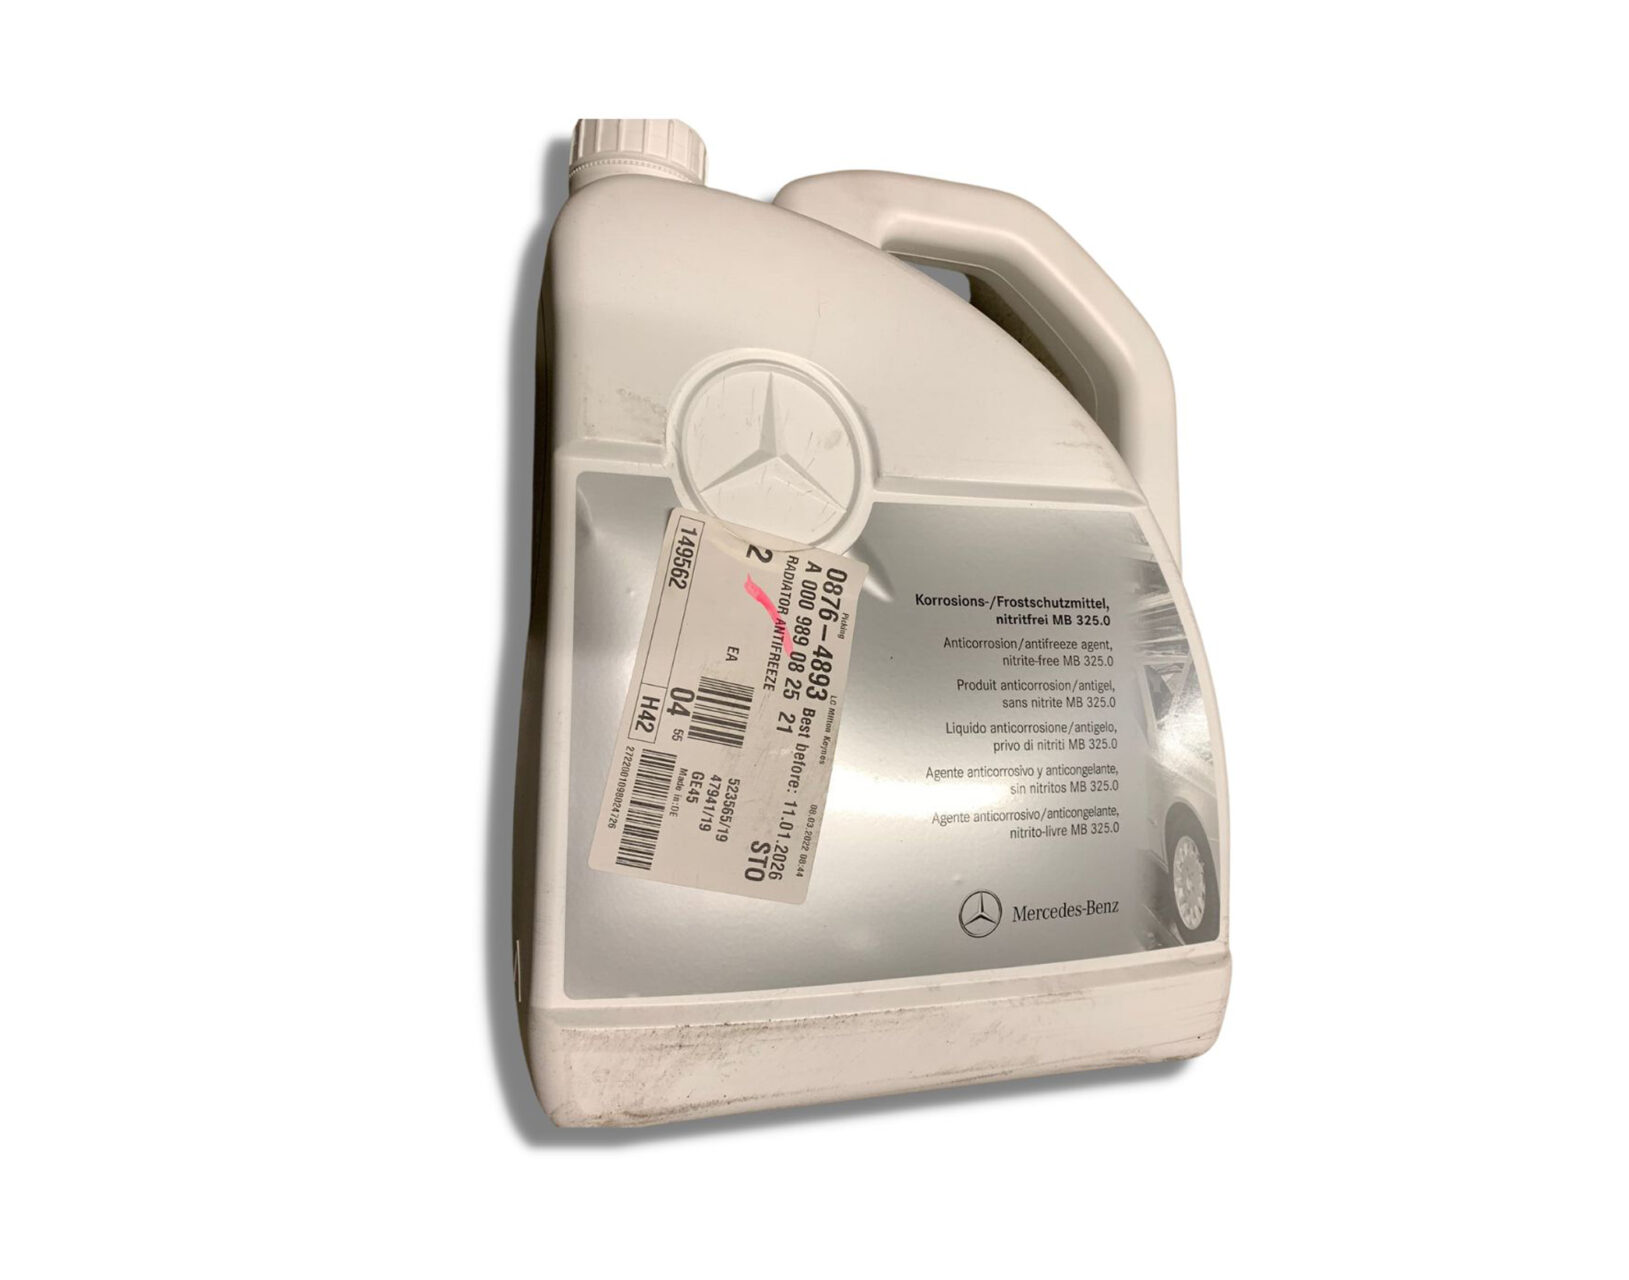 A000 989 08 25 10 Mercedes Benz 325.0 Anti-Corrosion / Anti-Freeze Agents  radiator coolant (1.5 liter)